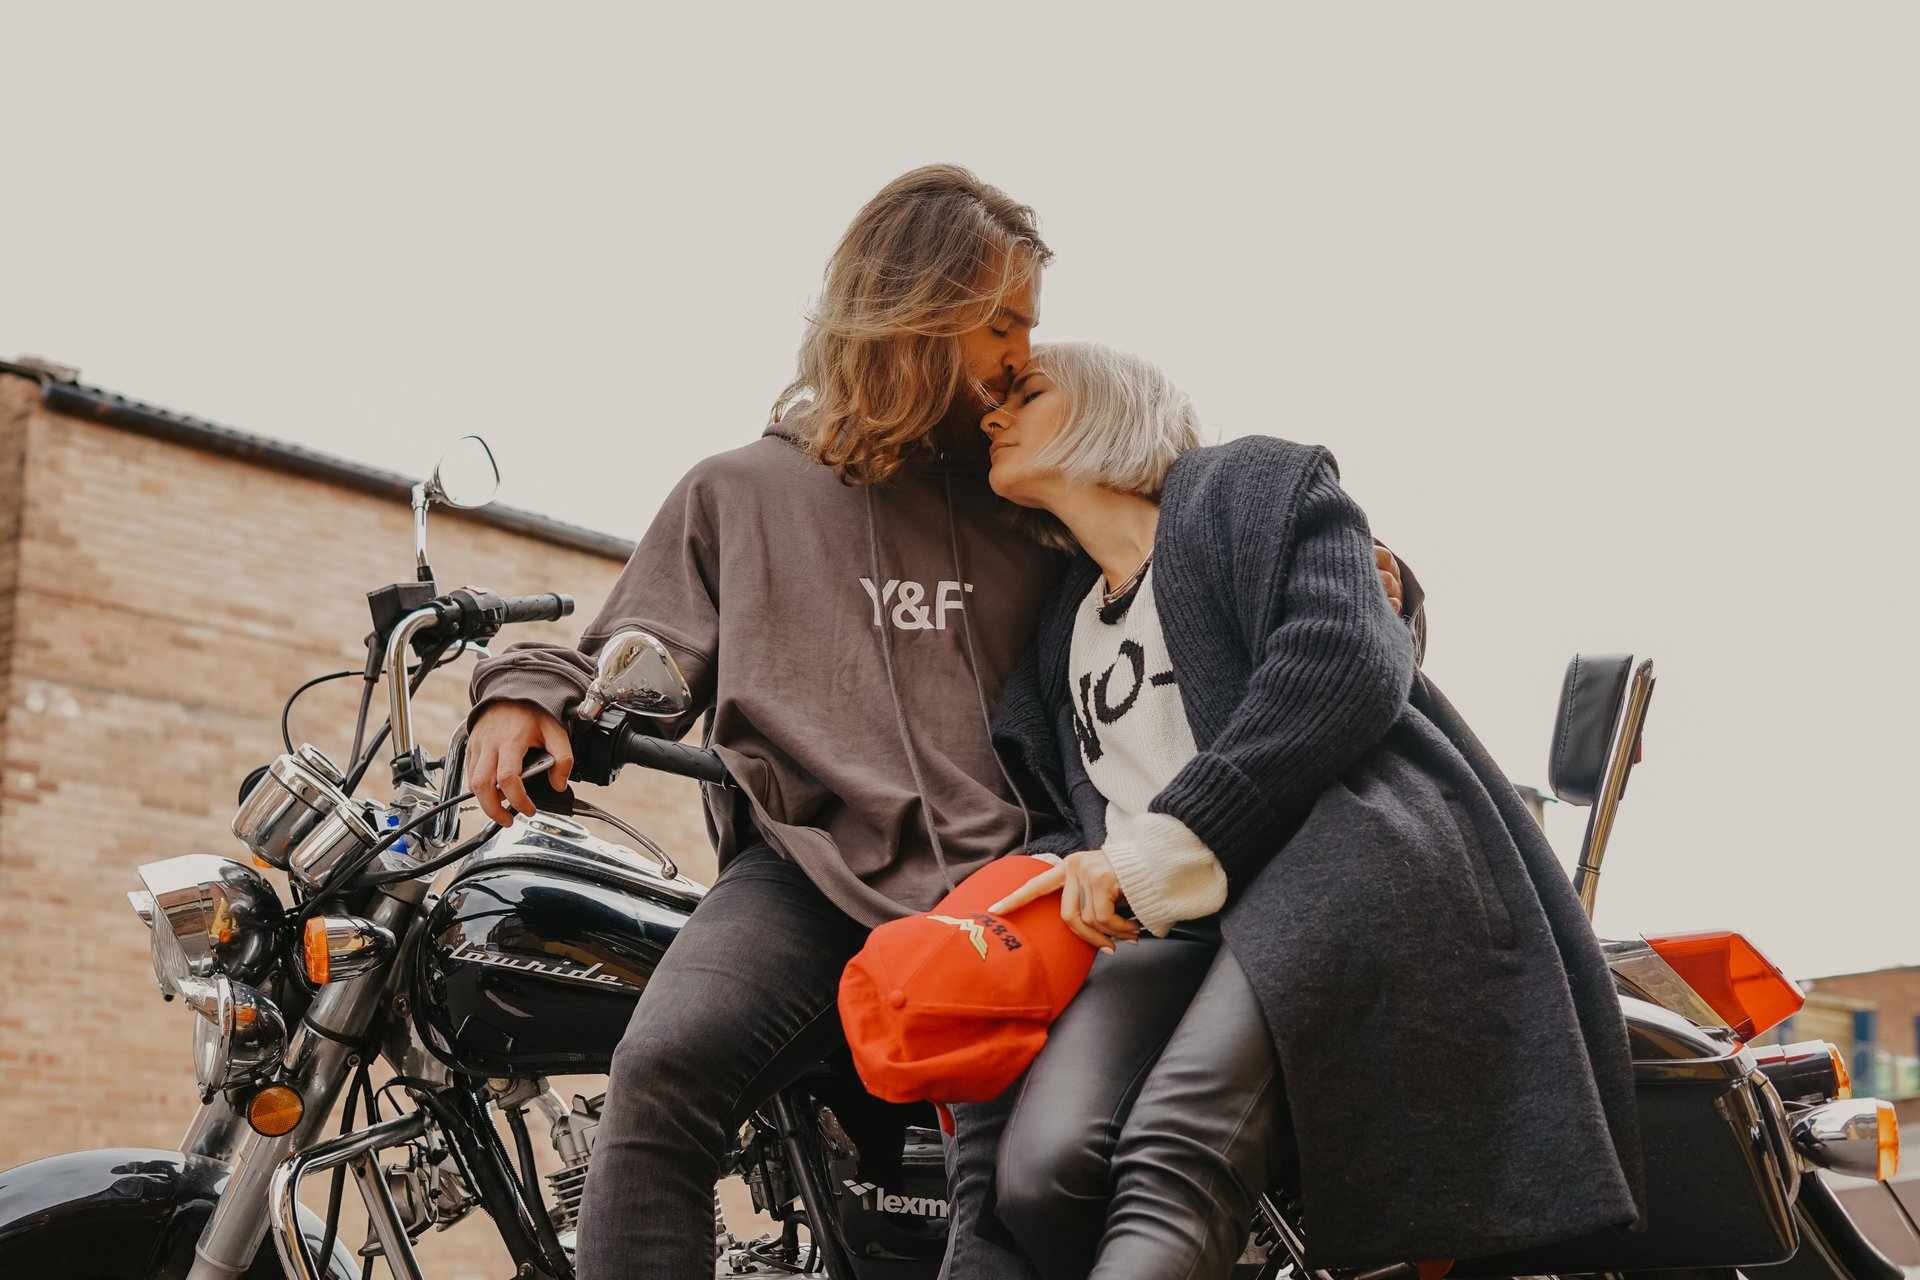 Motorrad - Freundschaften, Freunde finden, neue Bekanntschaften